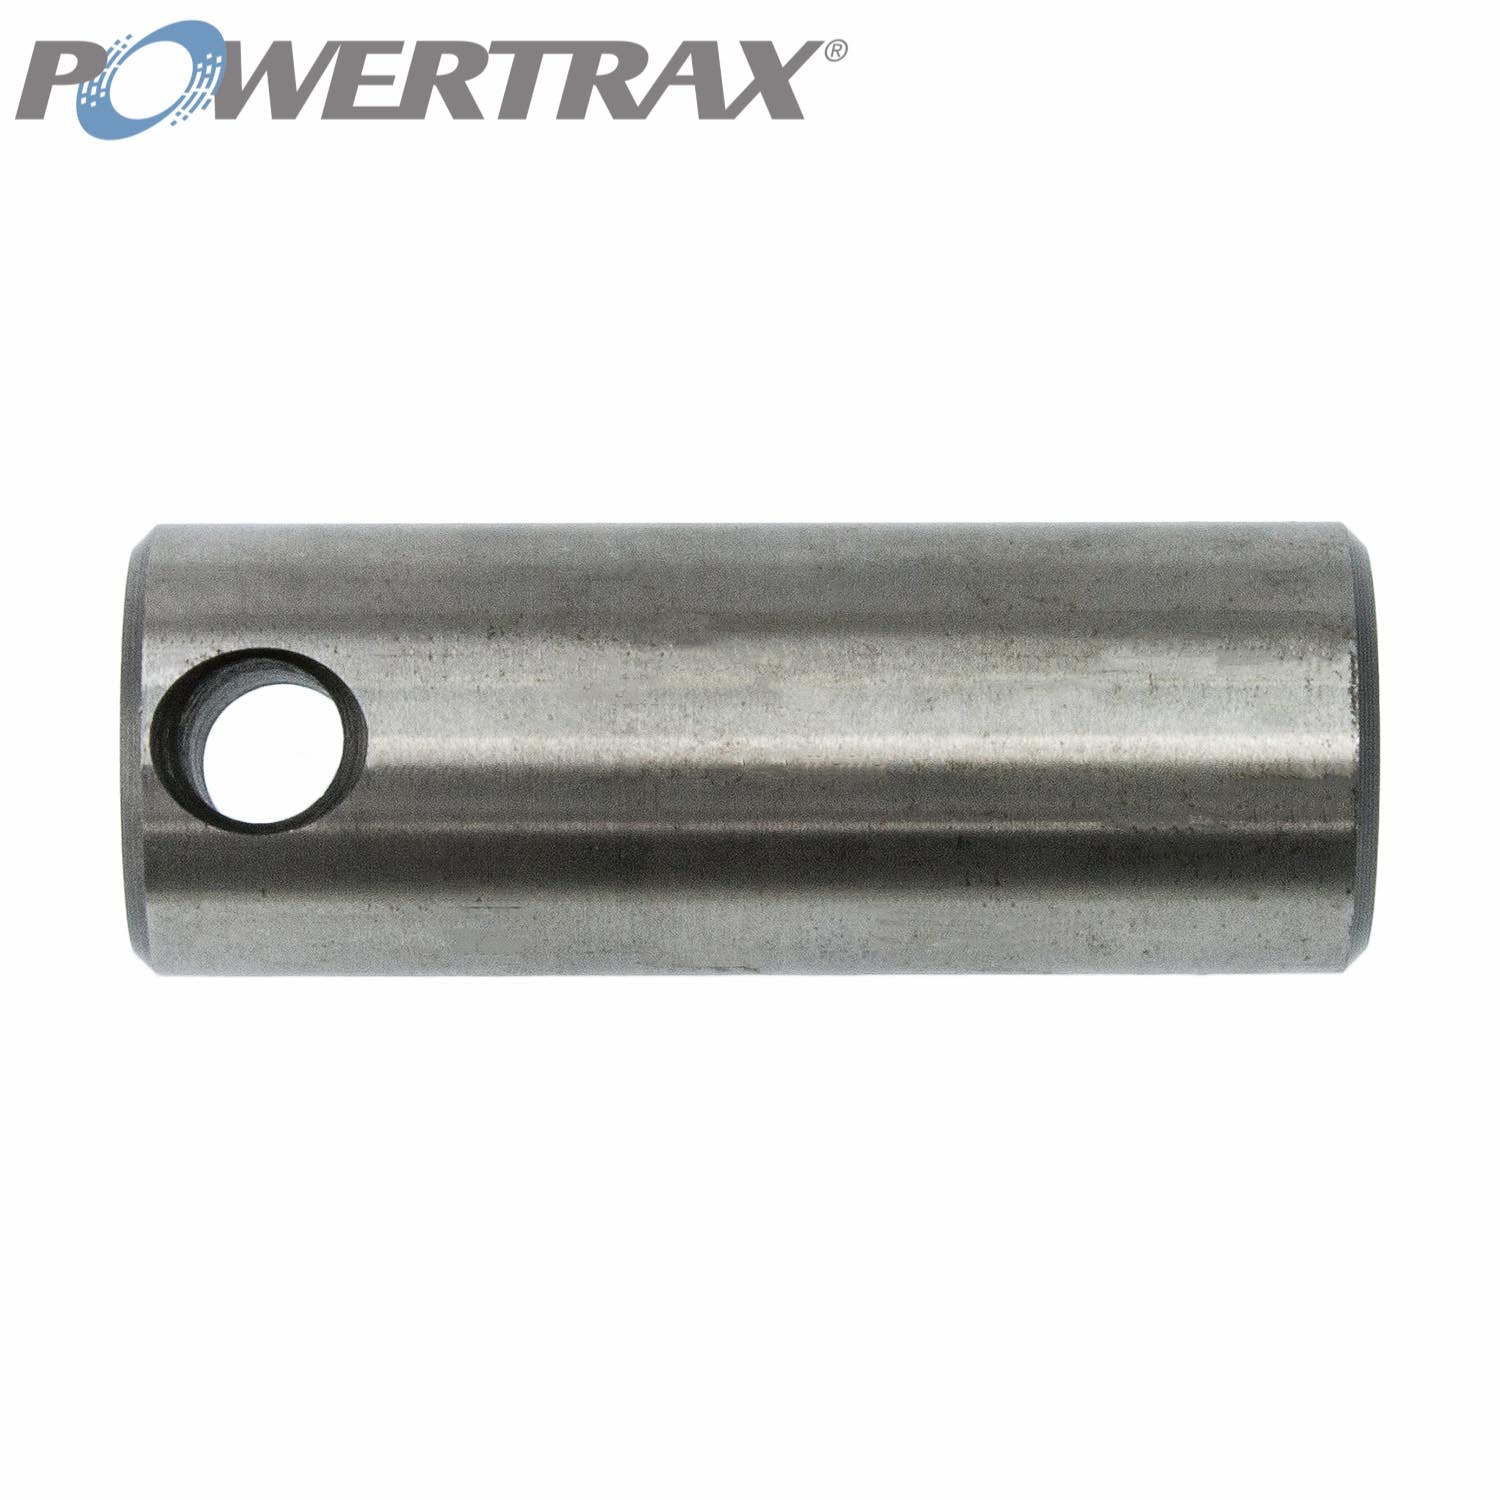 PowerTrax SF1810 Differential Pinion Shaft